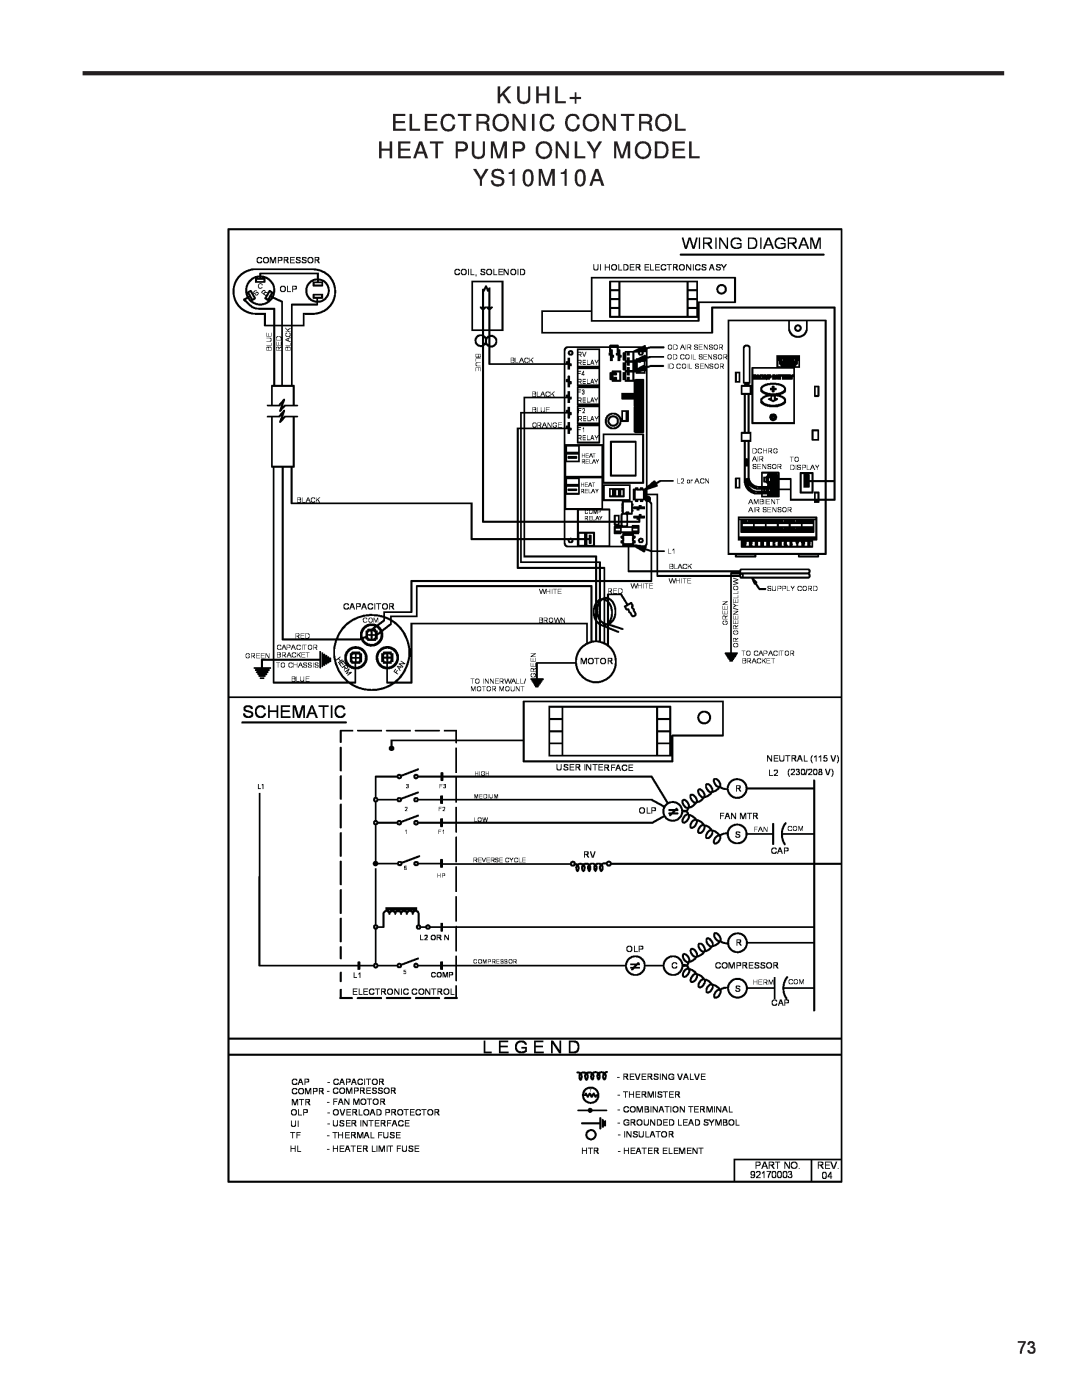 Friedrich R-410A service manual Kuhl+ Electronic Control Heat Pump Only Model, YS10M10A, Schematic, L E G E N D 